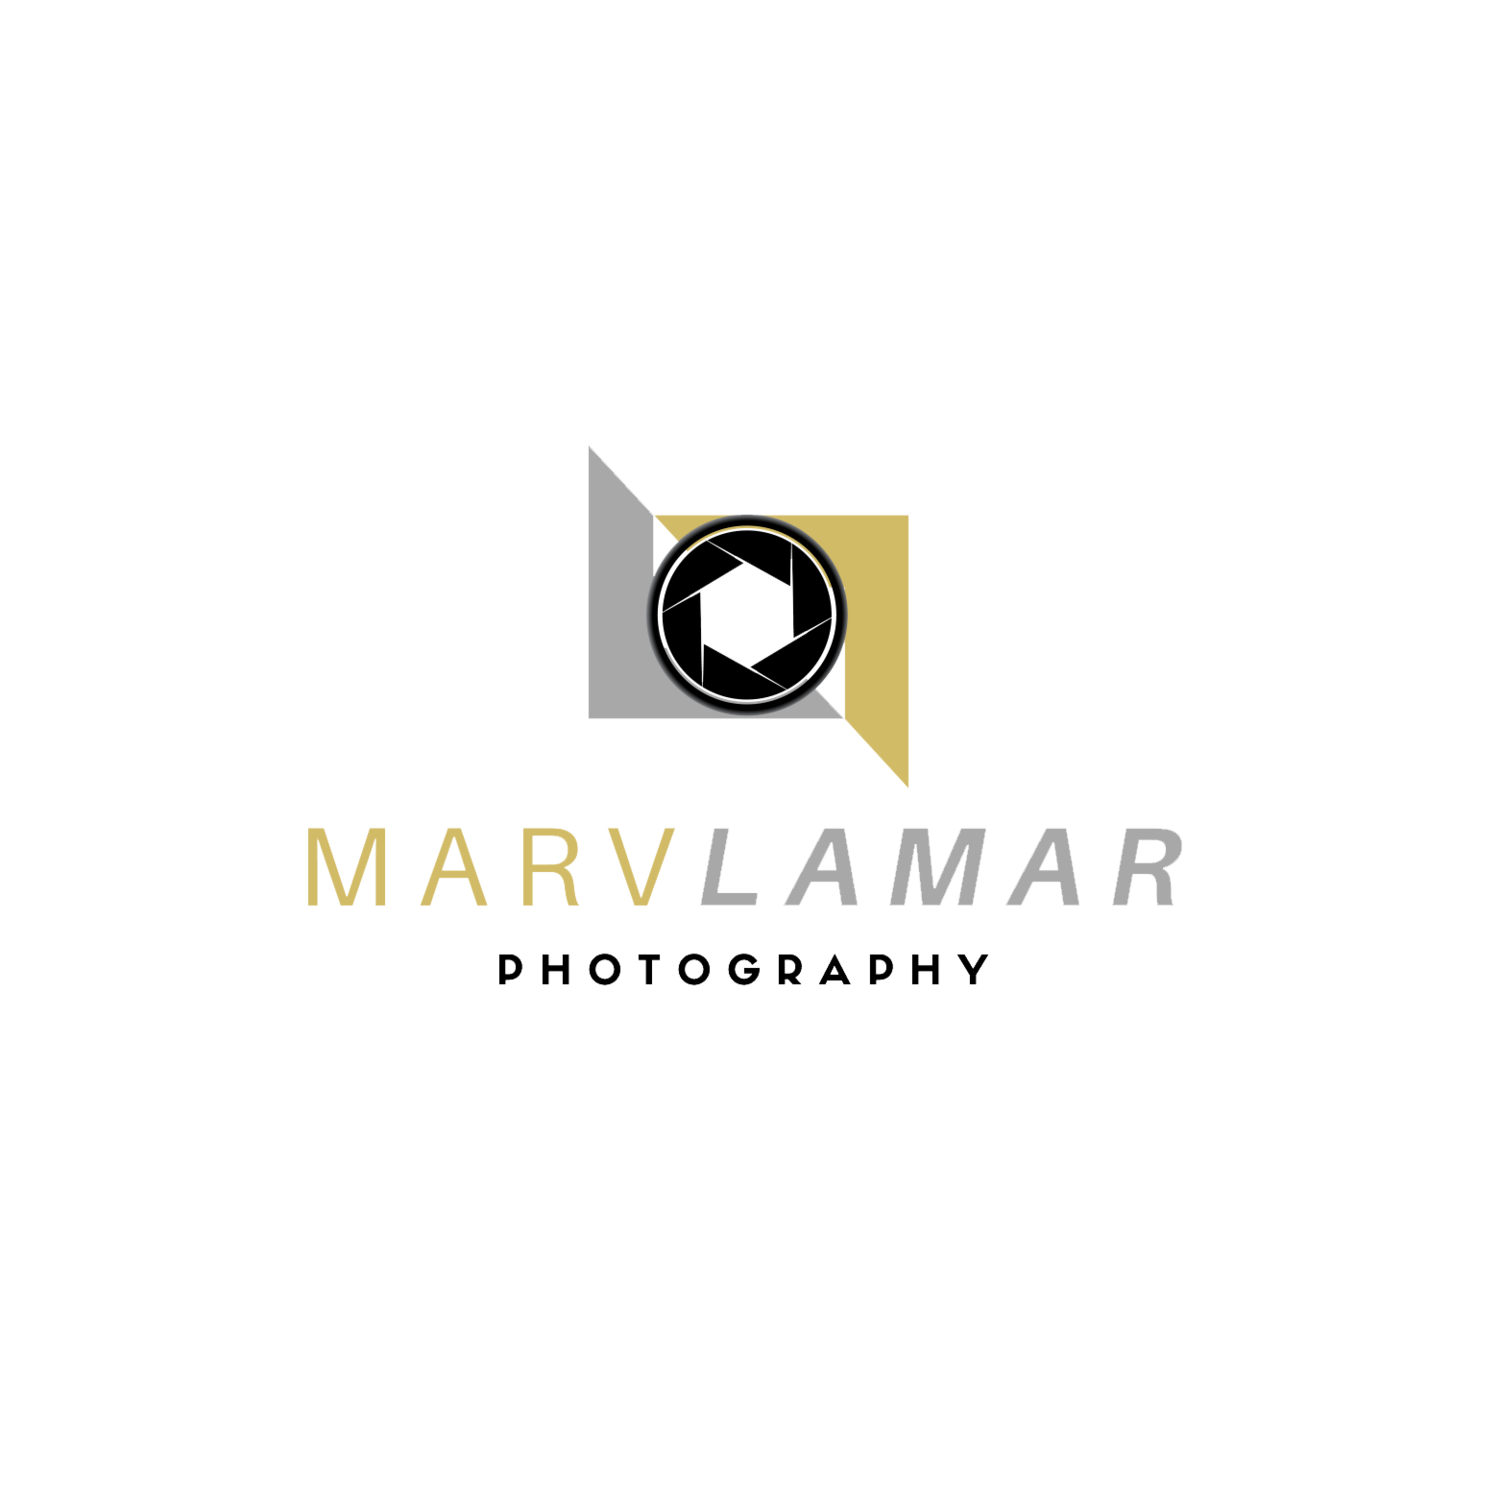 Marv Lamar Photography